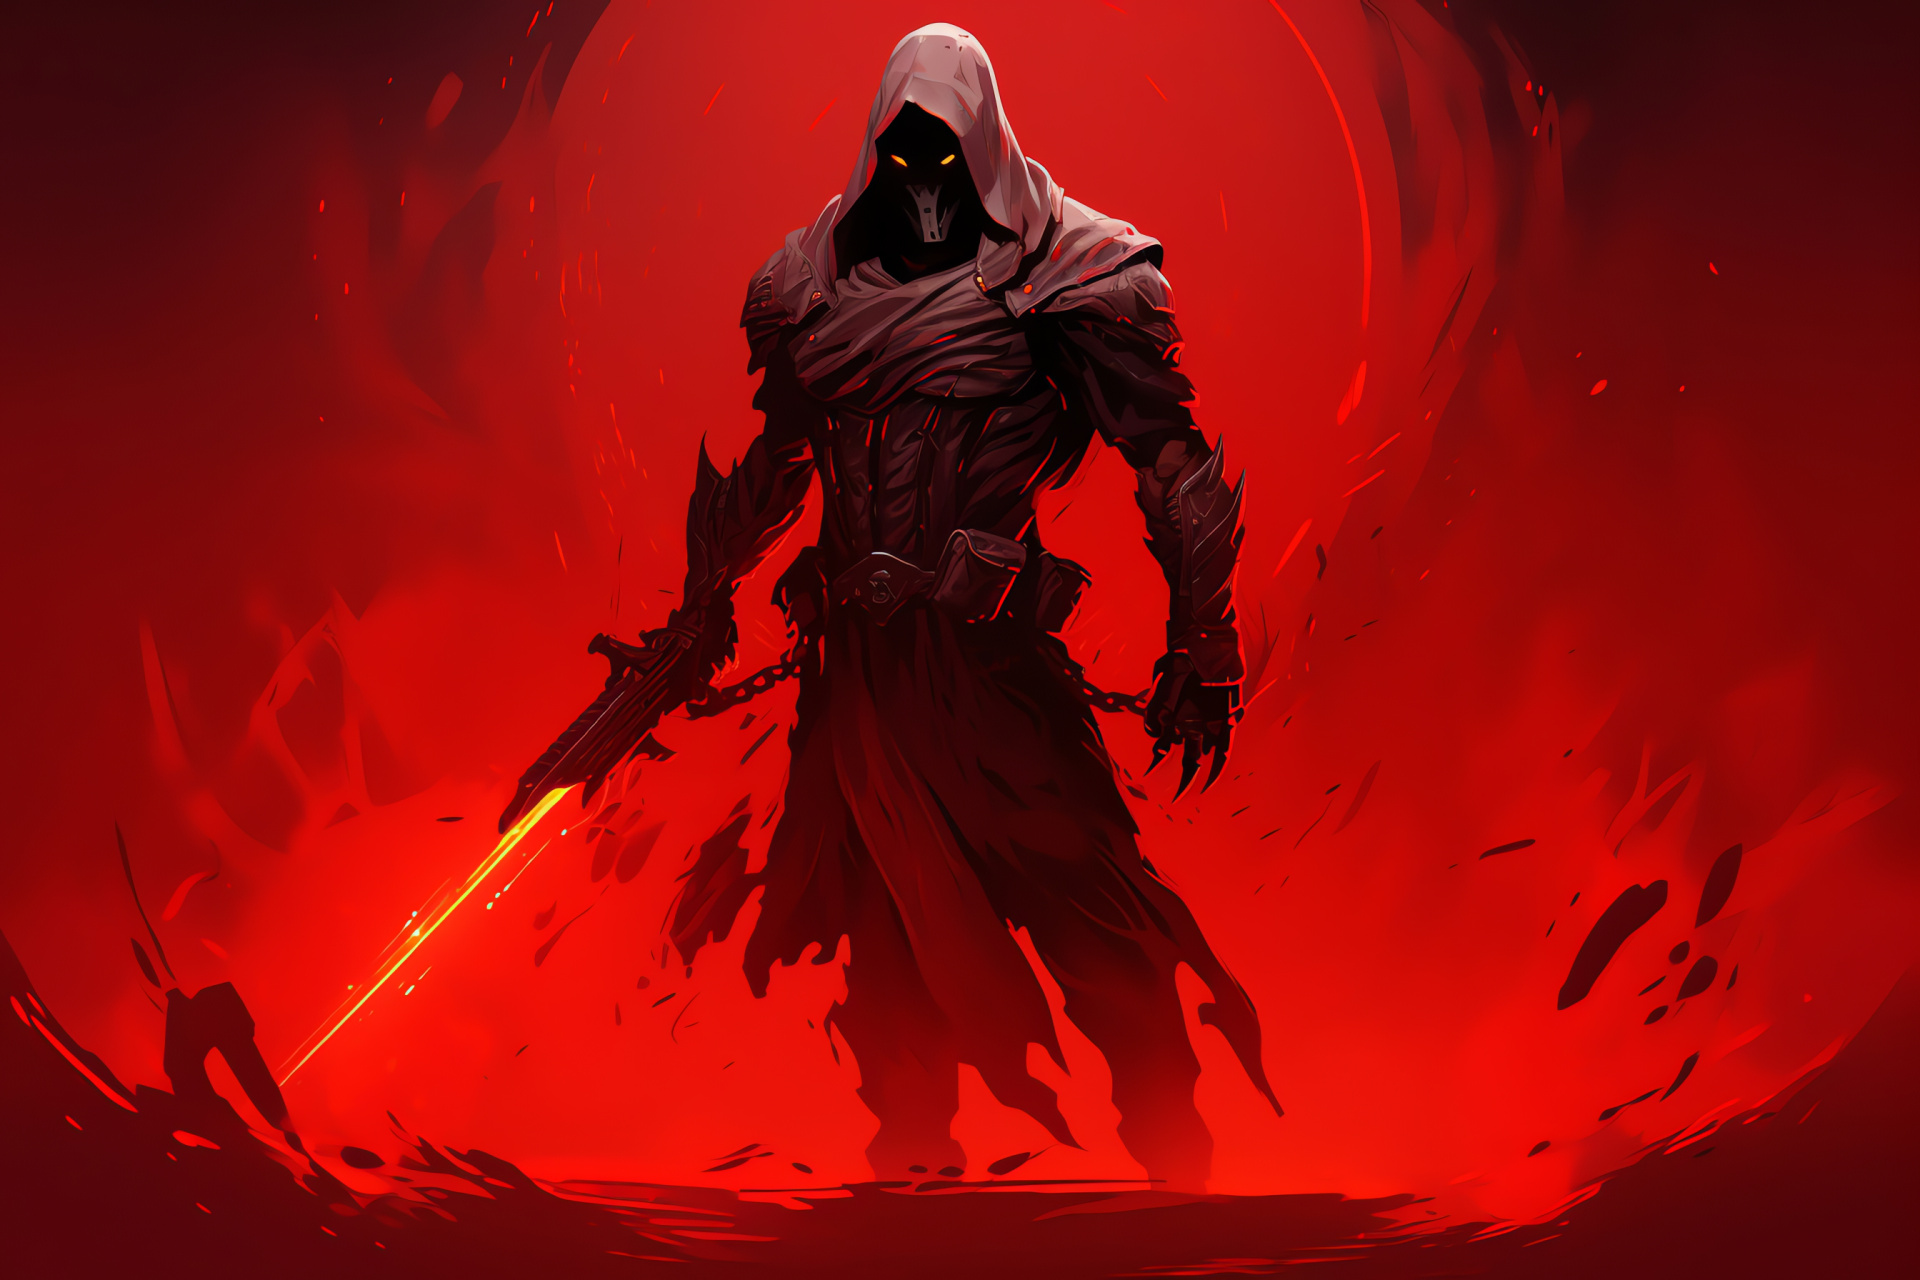 Overwatch game Reaper, Ghastly visage, Shadow Step move, Ominous presence, Face of terror, HD Desktop Image